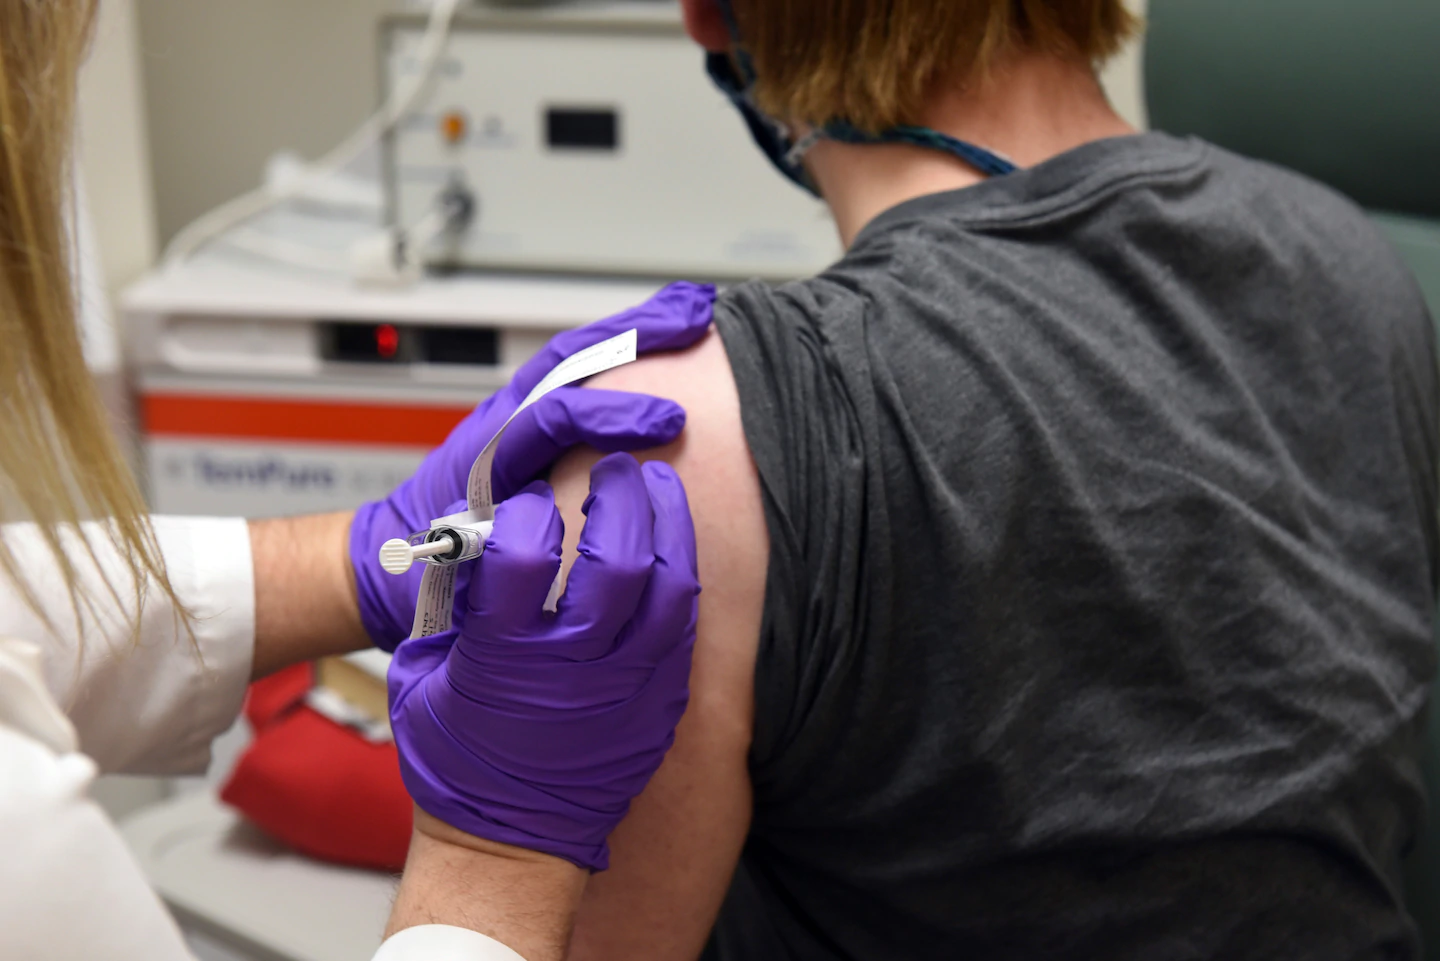 Volunteers can now sign up for large coronavirus vaccine studies